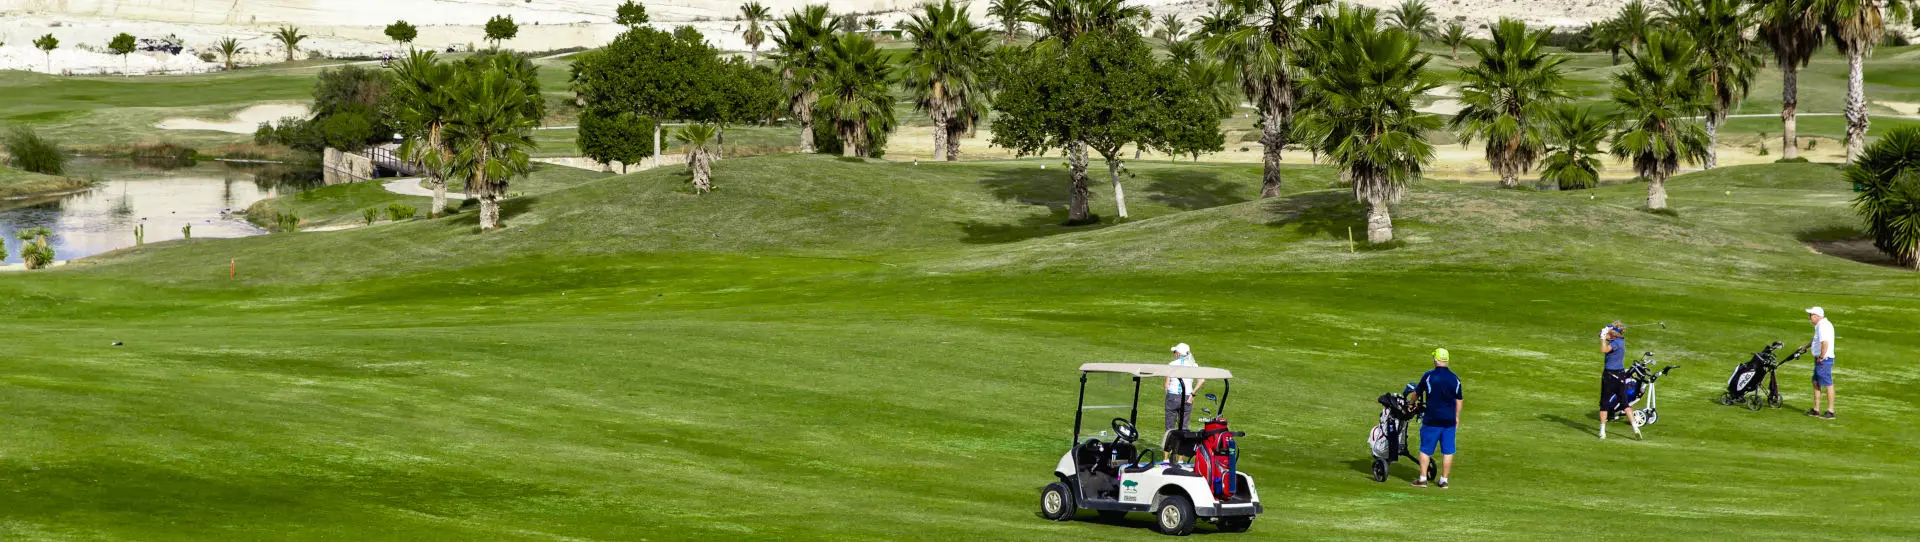 Spain golf courses - Vistabella Golf  - Photo 1